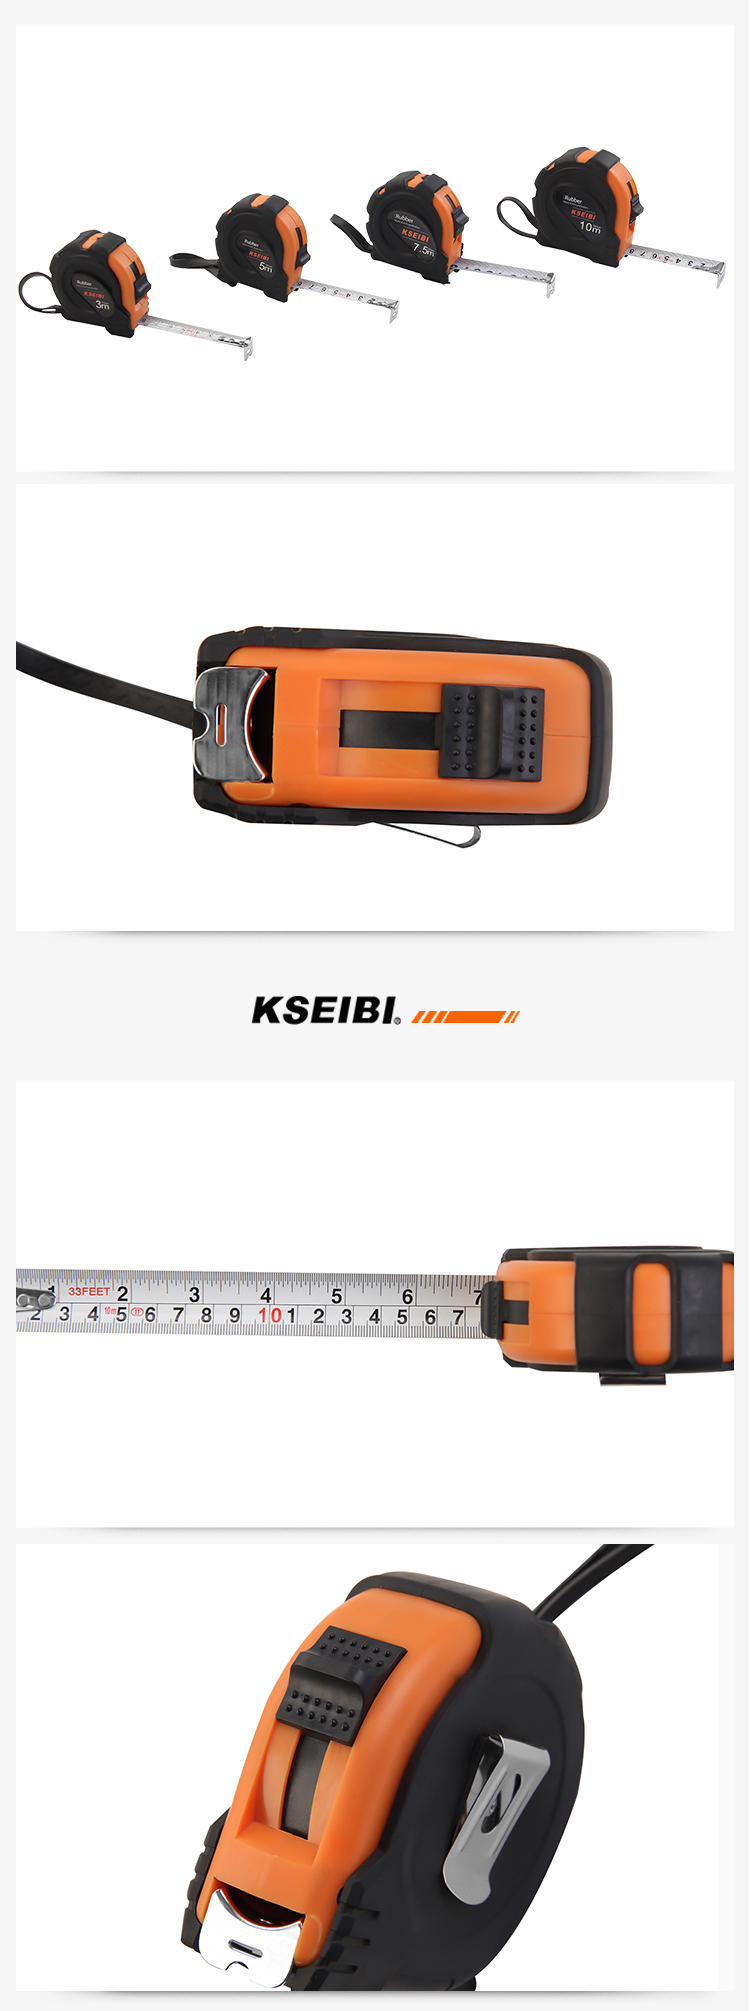 Kseibi Heavy Duty 3m/5m/7.5m Automatic Steel Measuring Tape for Tape Measuring